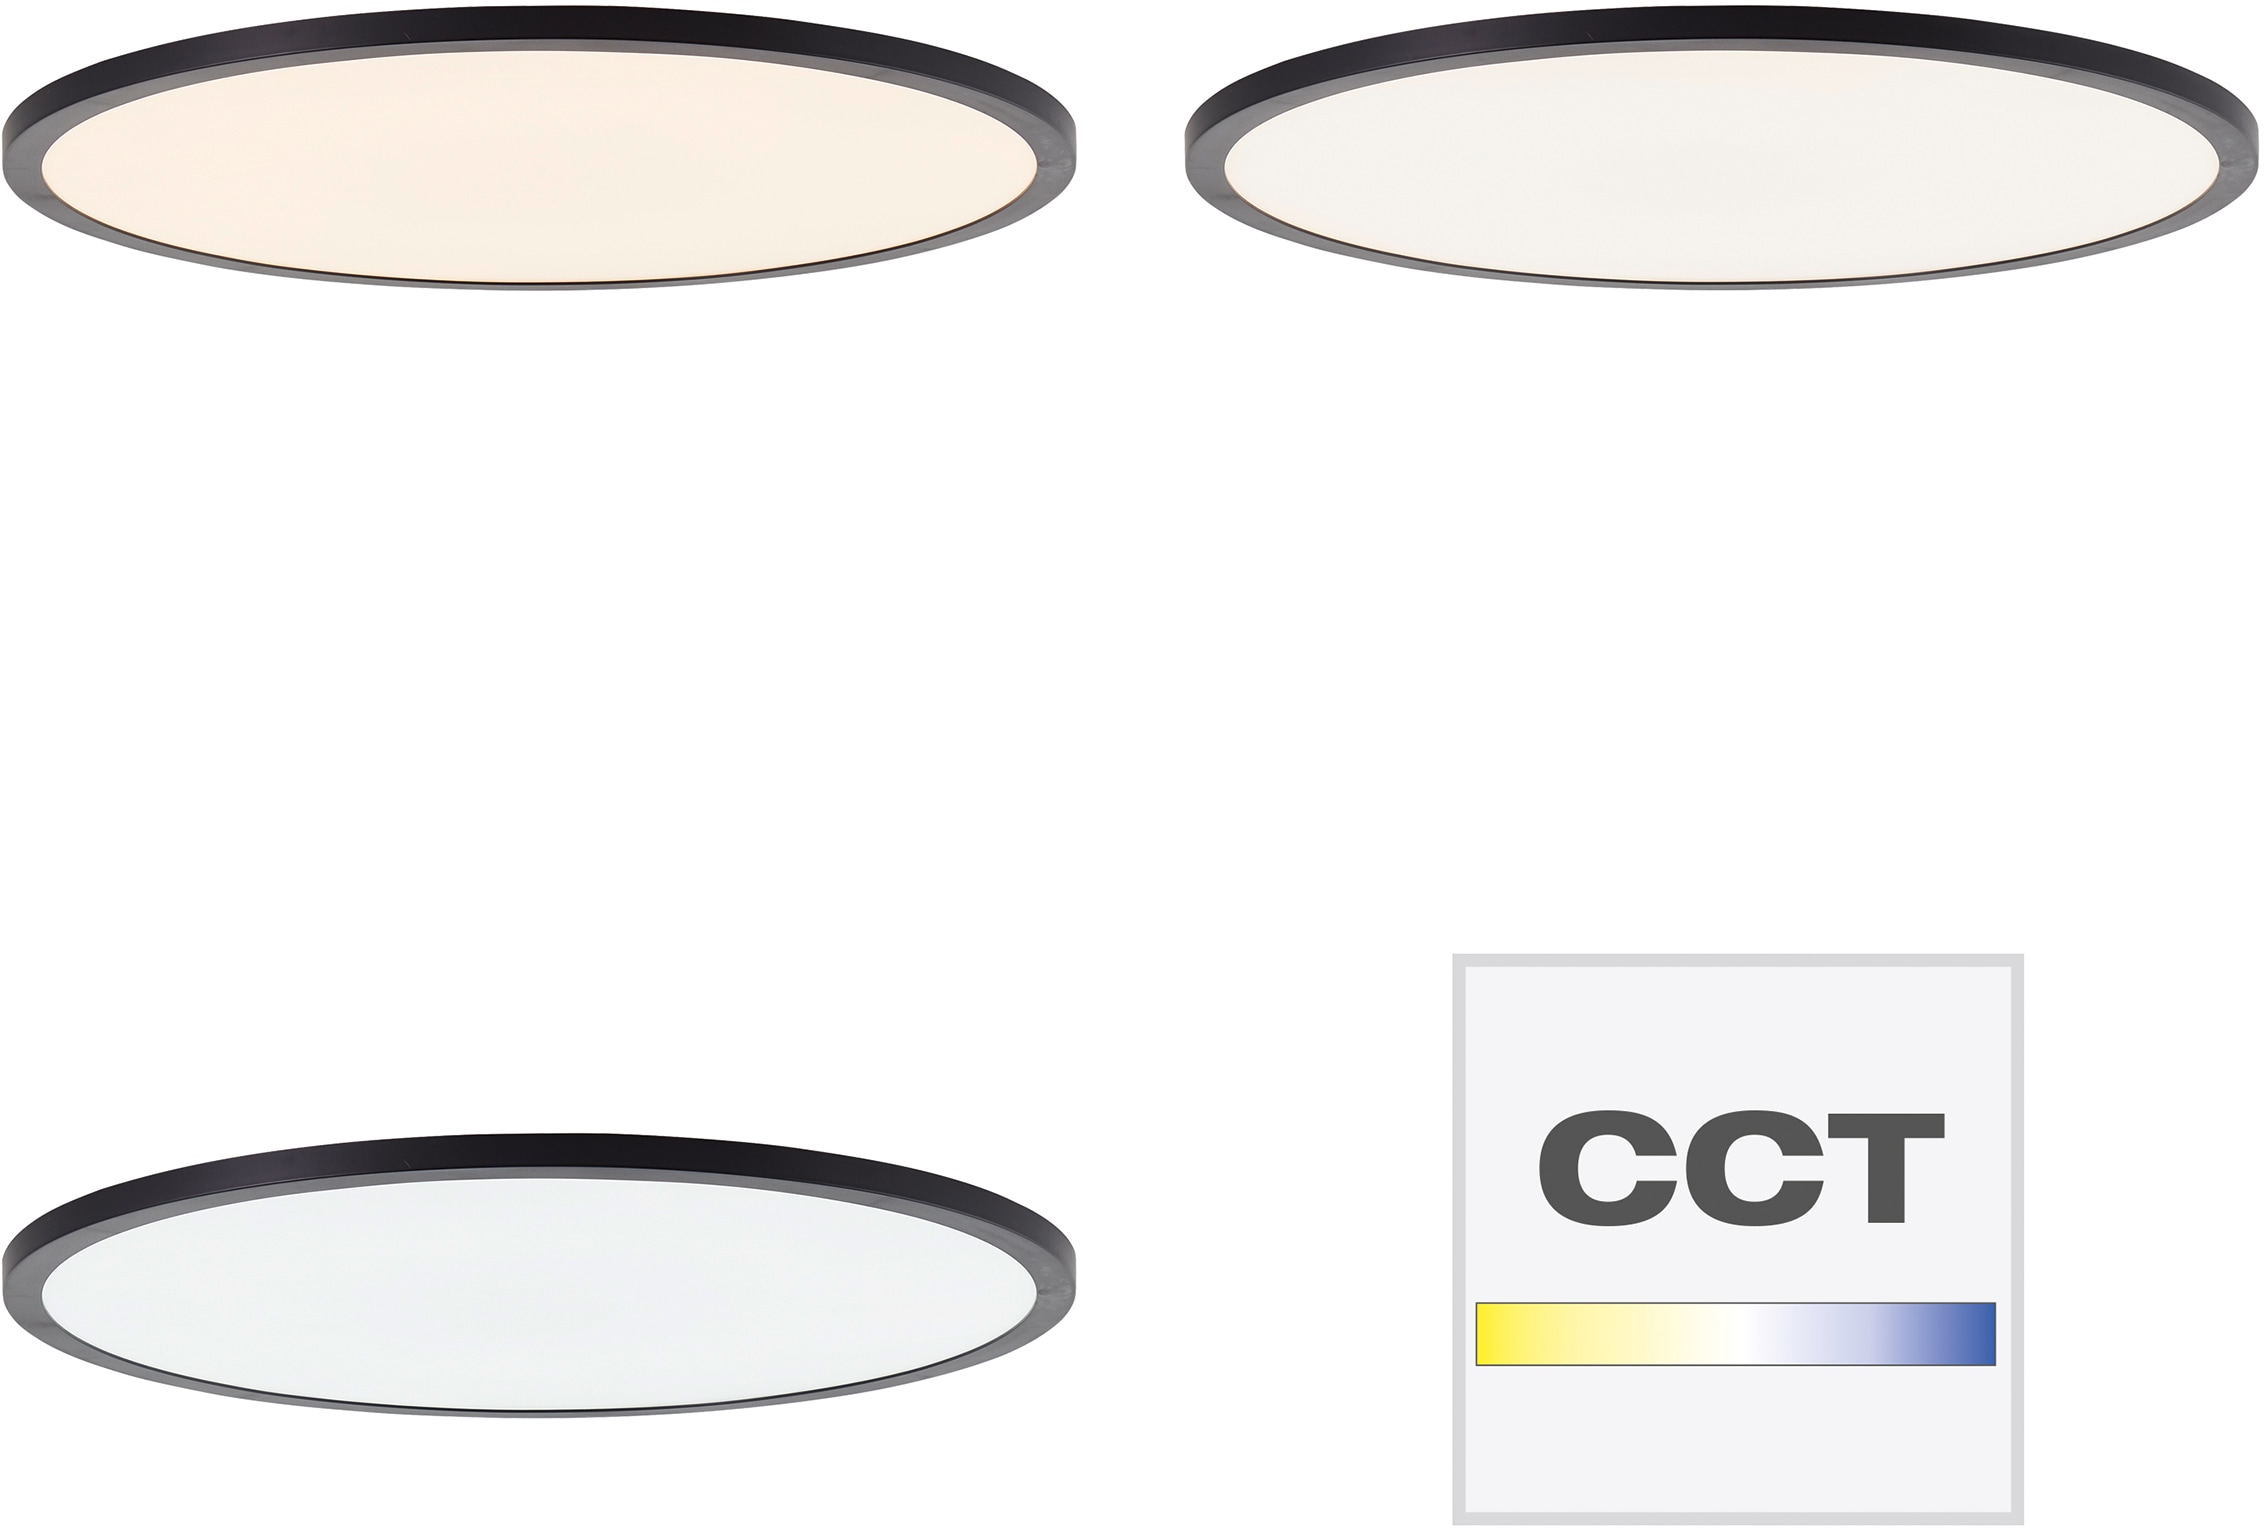 Brilliant LED Panel »Tuco«, 1 flammig, Leuchtmittel LED-Modul | LED fest integriert, Ø 50cm, dimmbar, CCT, 3900 lm, Fernbedienung, Kunststoff, schwarz/weiß